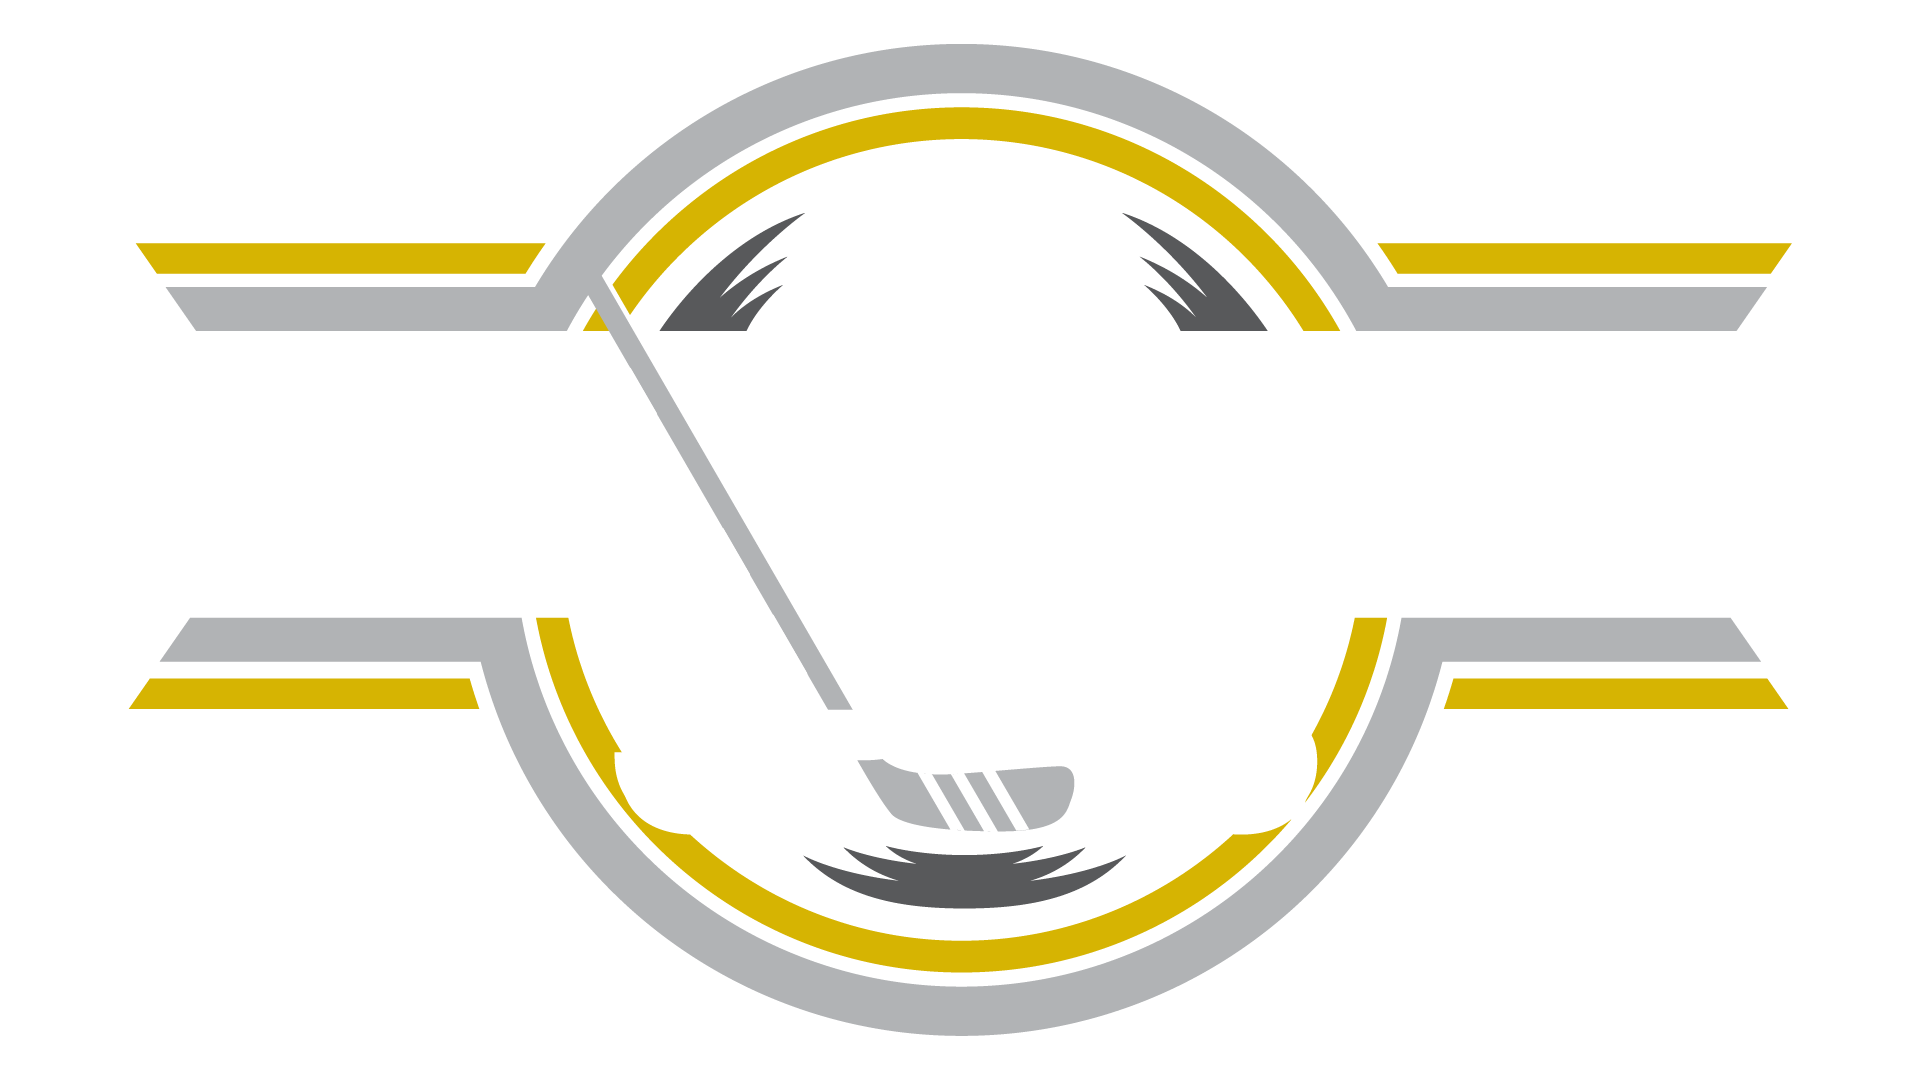 The Morning Spins logo